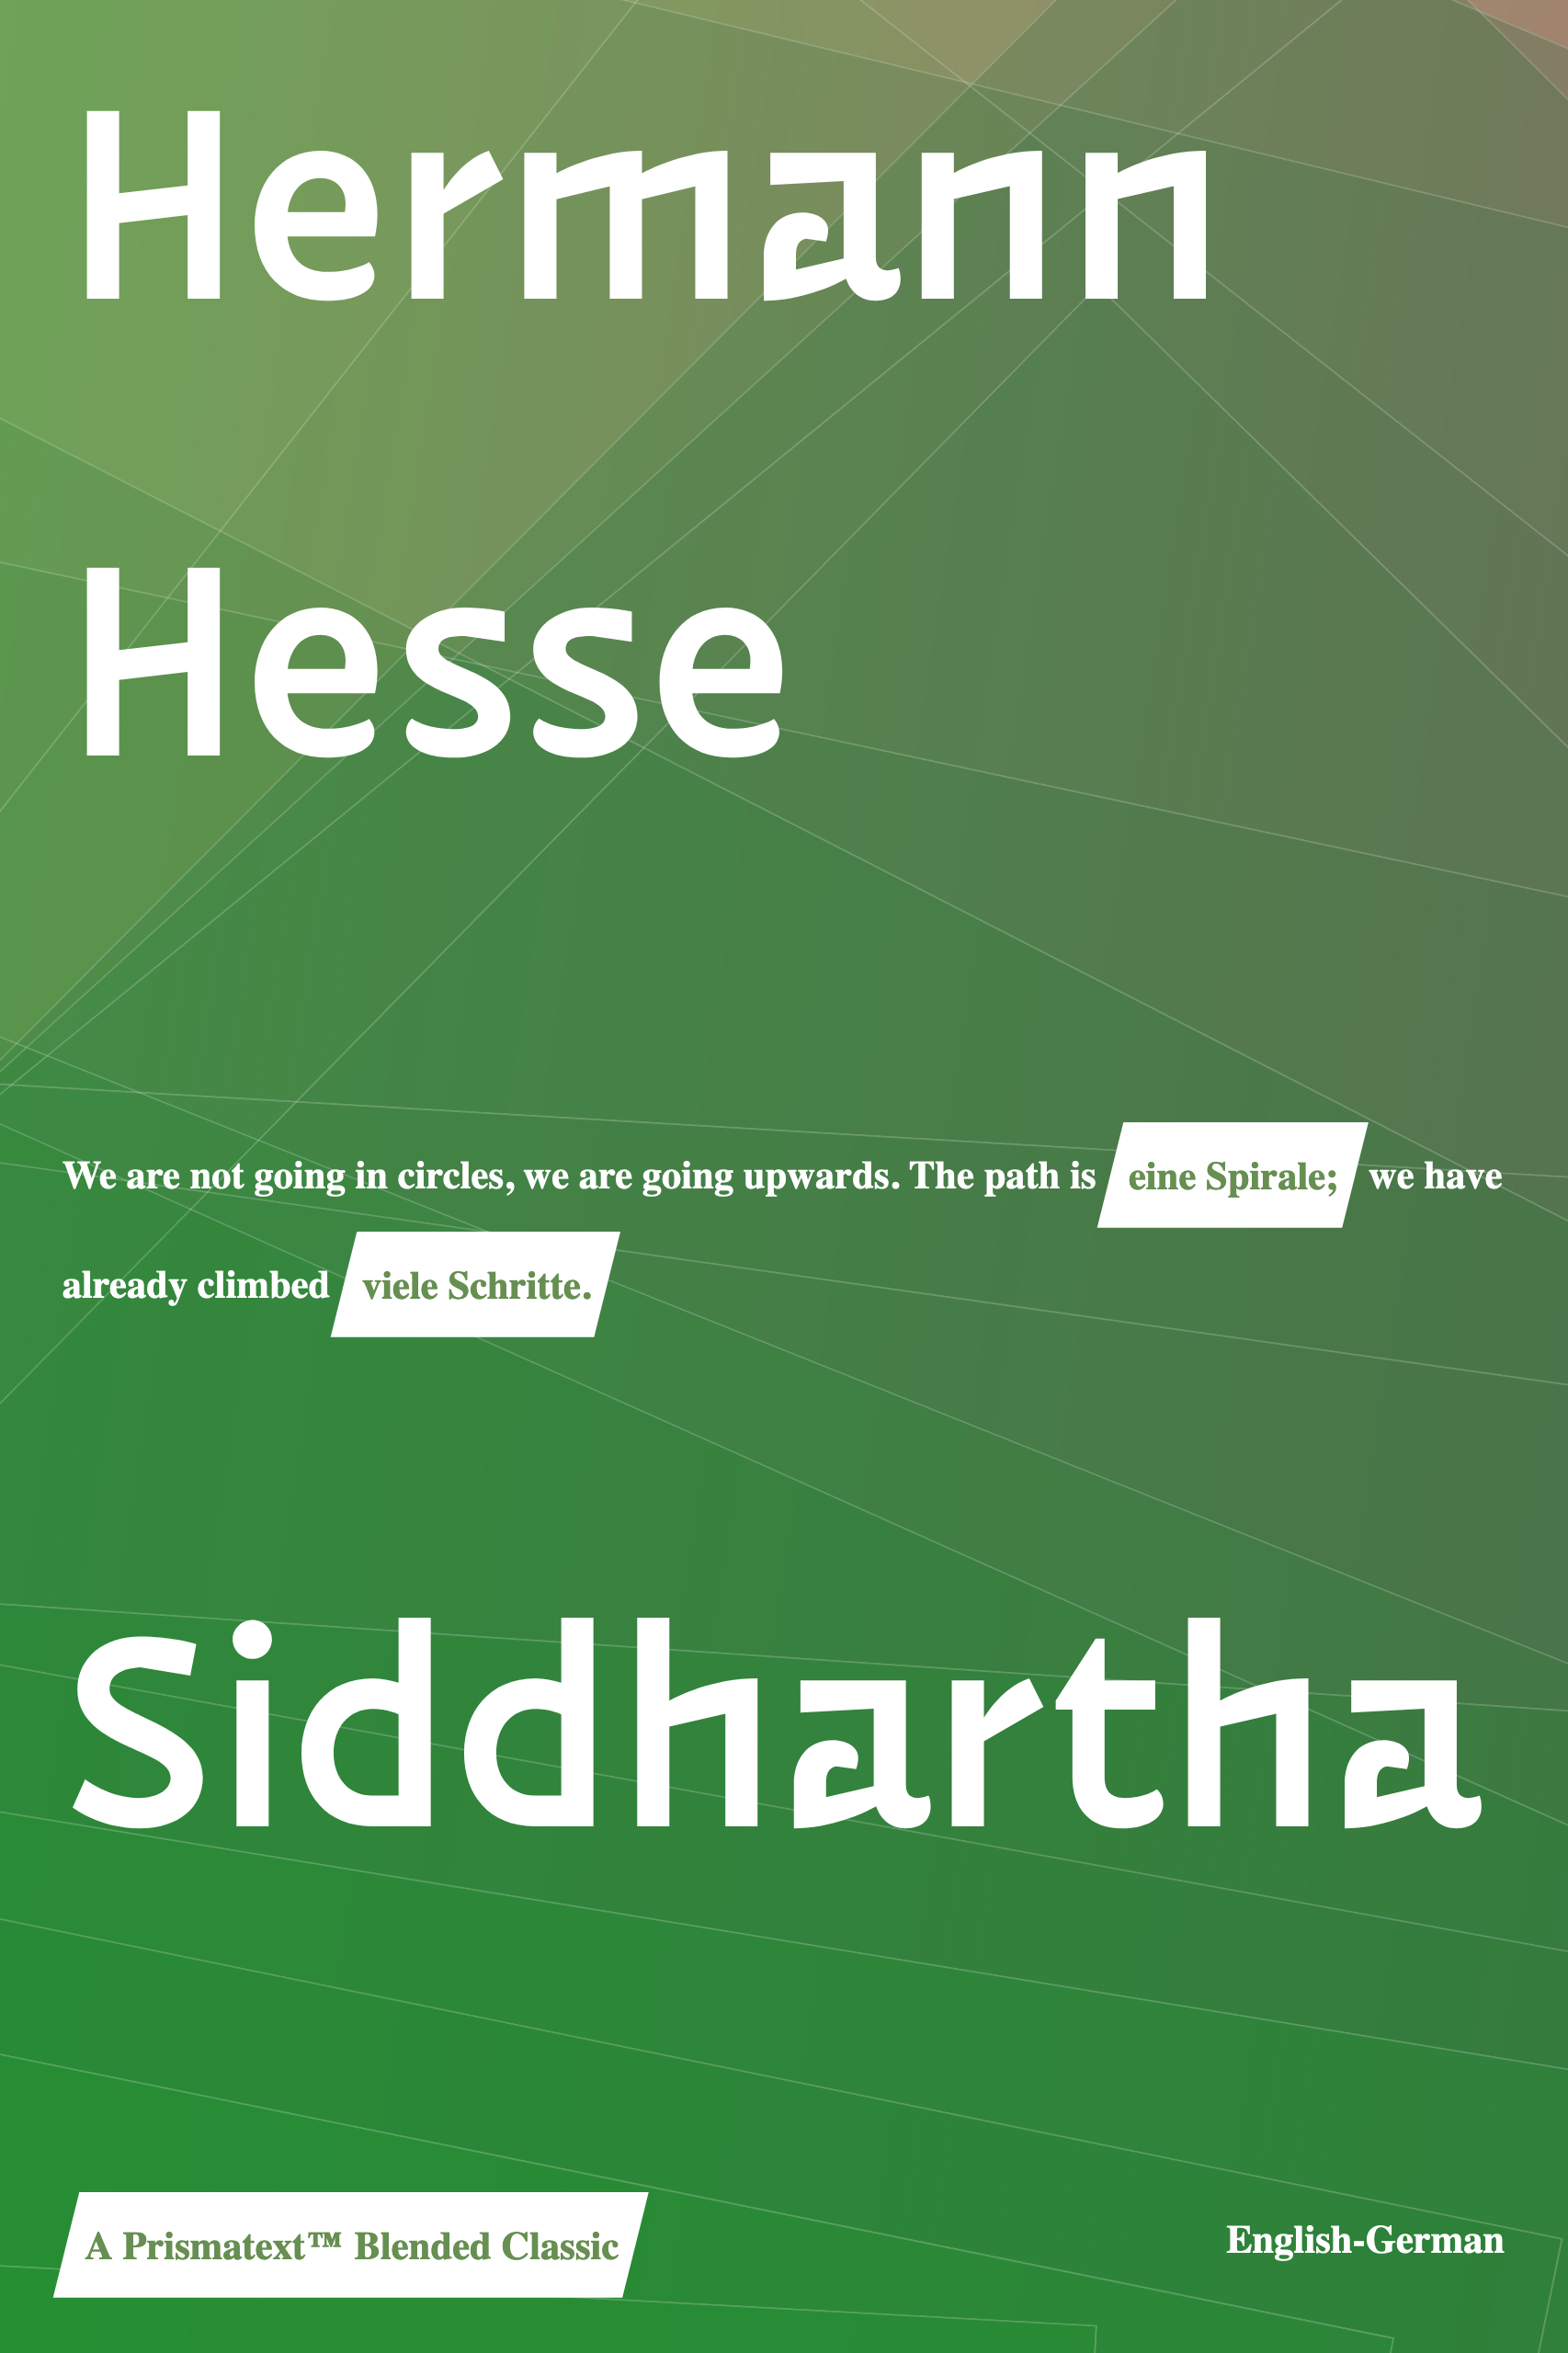 Siddhartha: An Indian Tale by Hermann Hesse